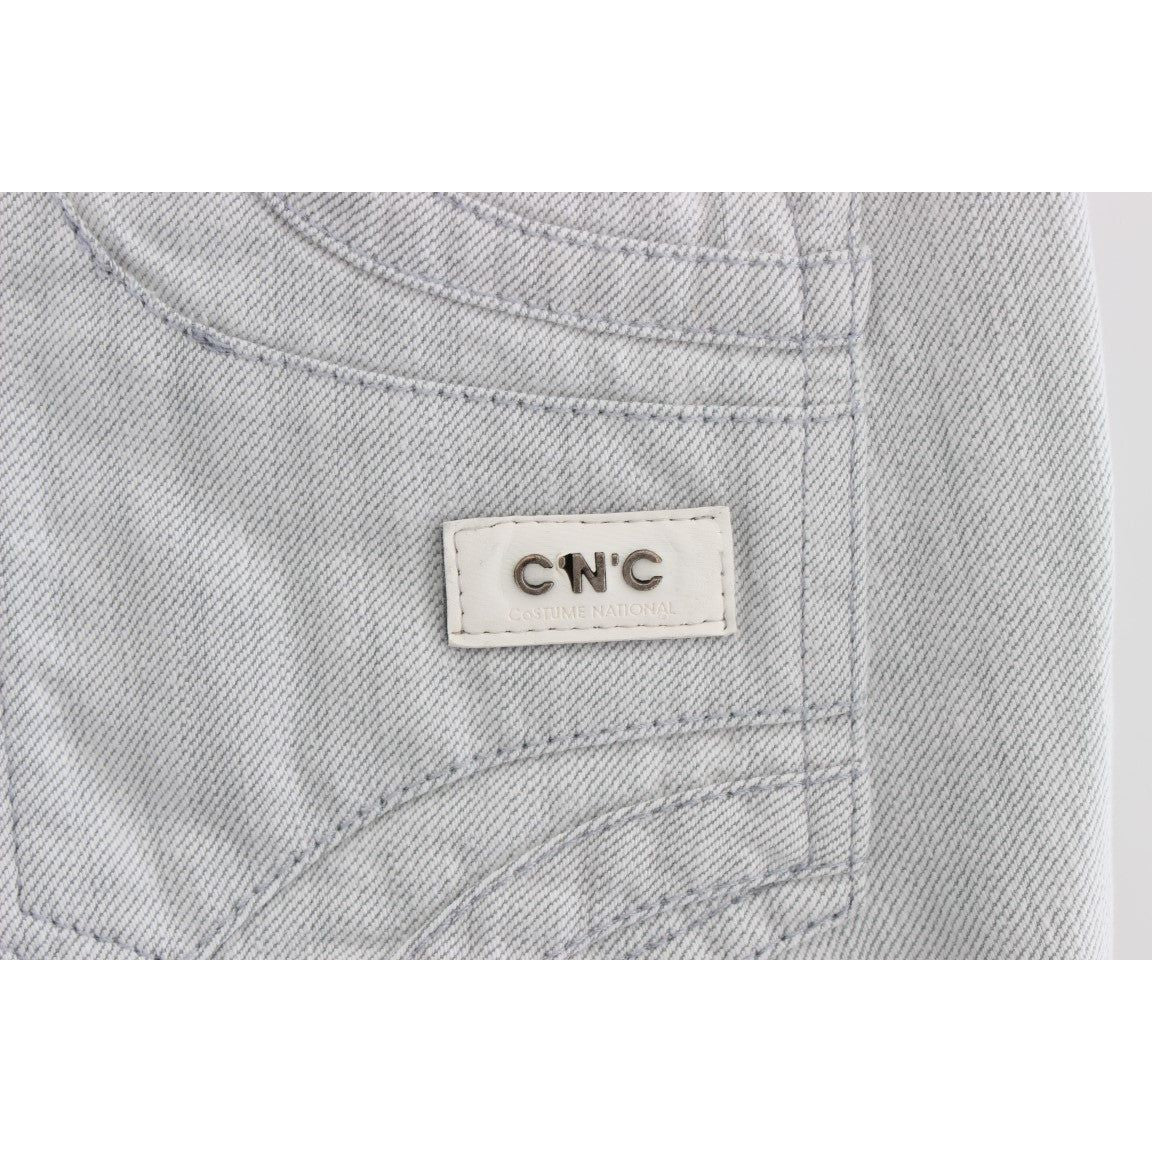 Costume National Chic Gray Slim Fit Designer Jeans gray-cotton-slim-fit-bootcut-jeans 318816-gray-cotton-slim-fit-bootcut-jeans-7.jpg